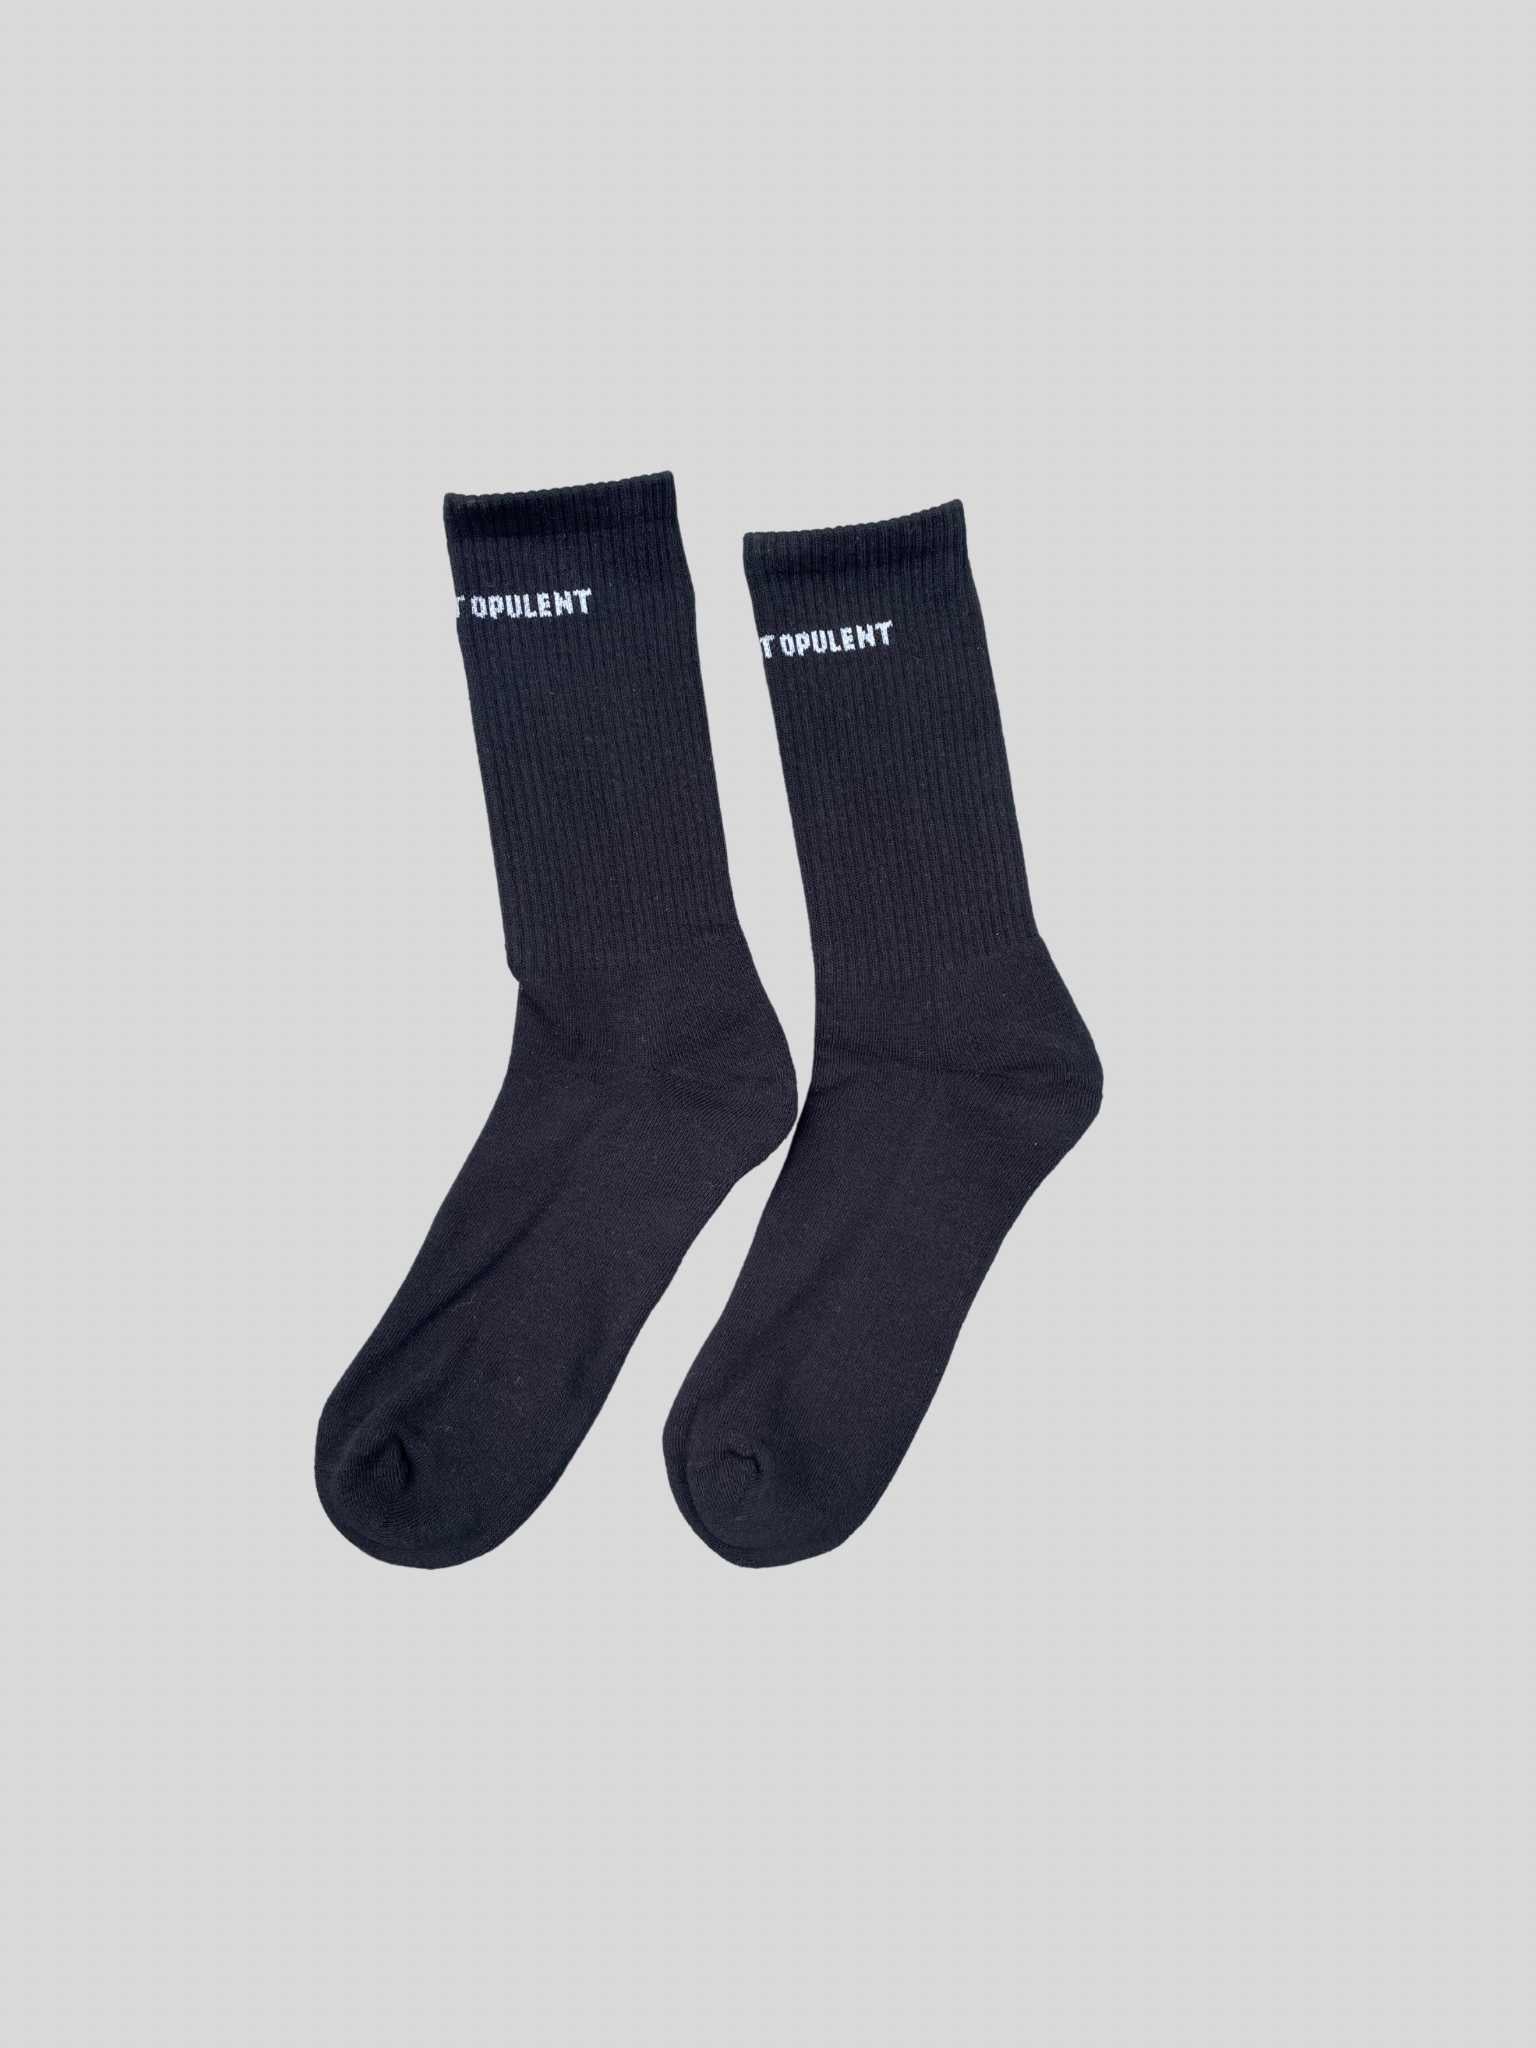 Clean But Opulent Socks - Black Opulent Apparel